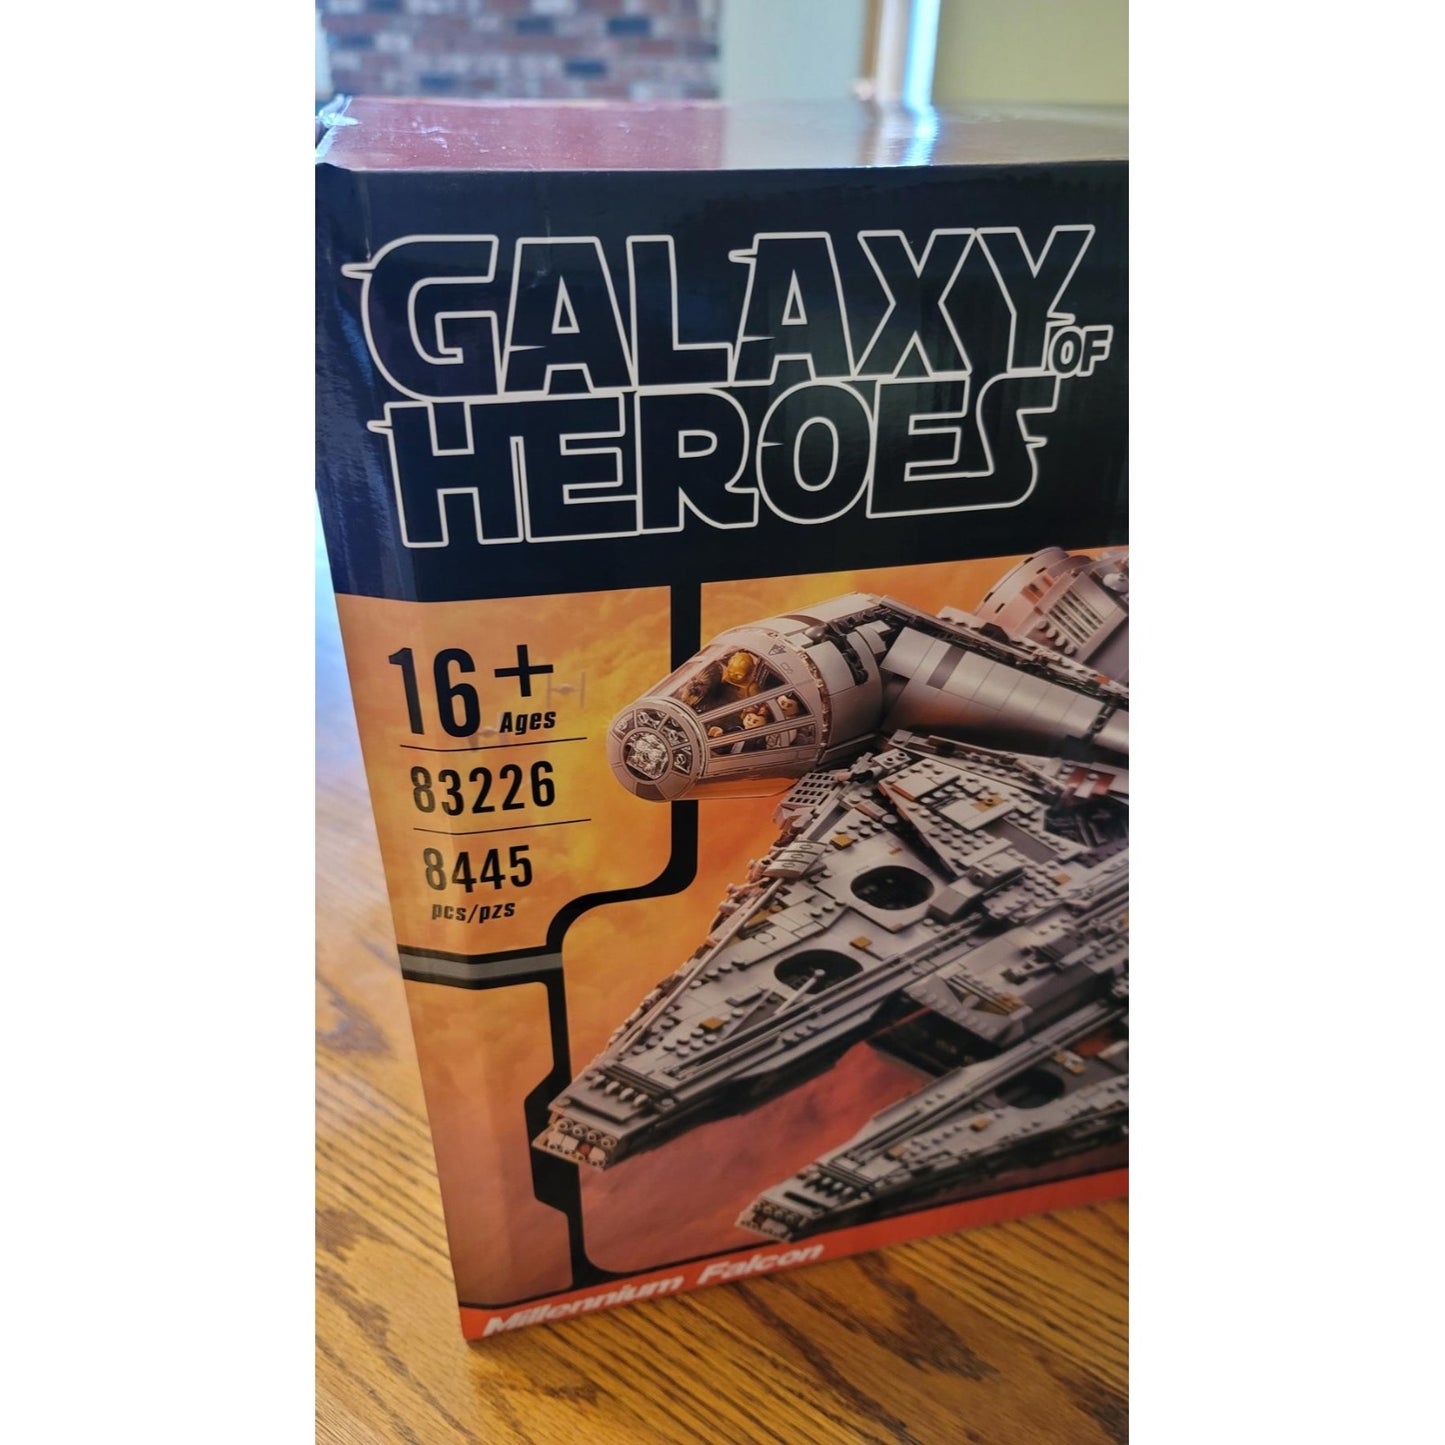 Millennium Falcon - Galaxy of Heroes block Compatible Star Wars New 8445 PCS